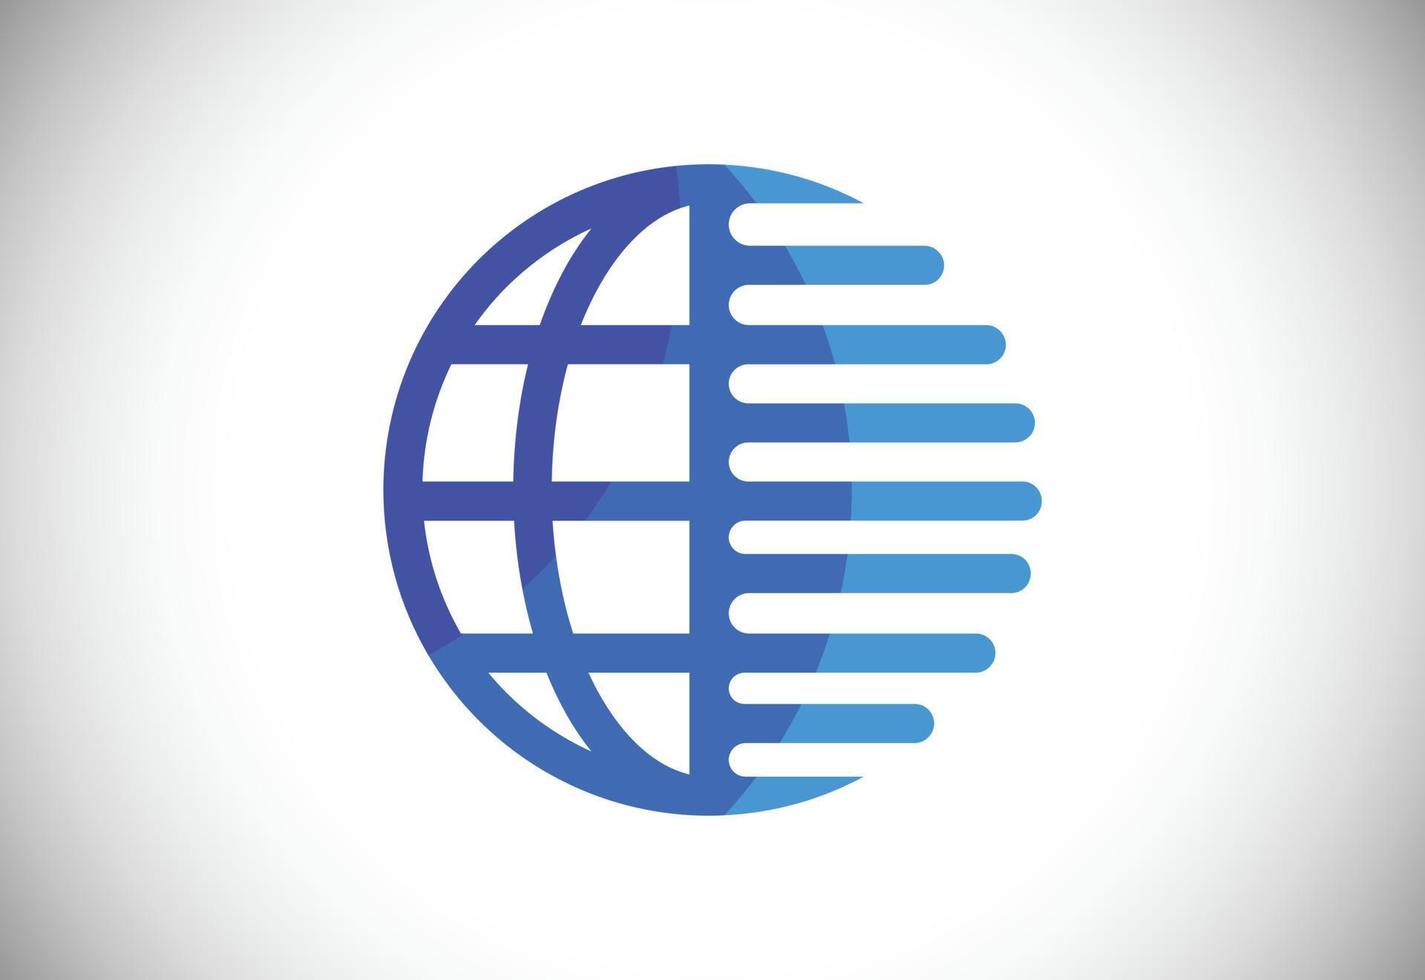 Earth logo design template. Globe icon sign symbol vector